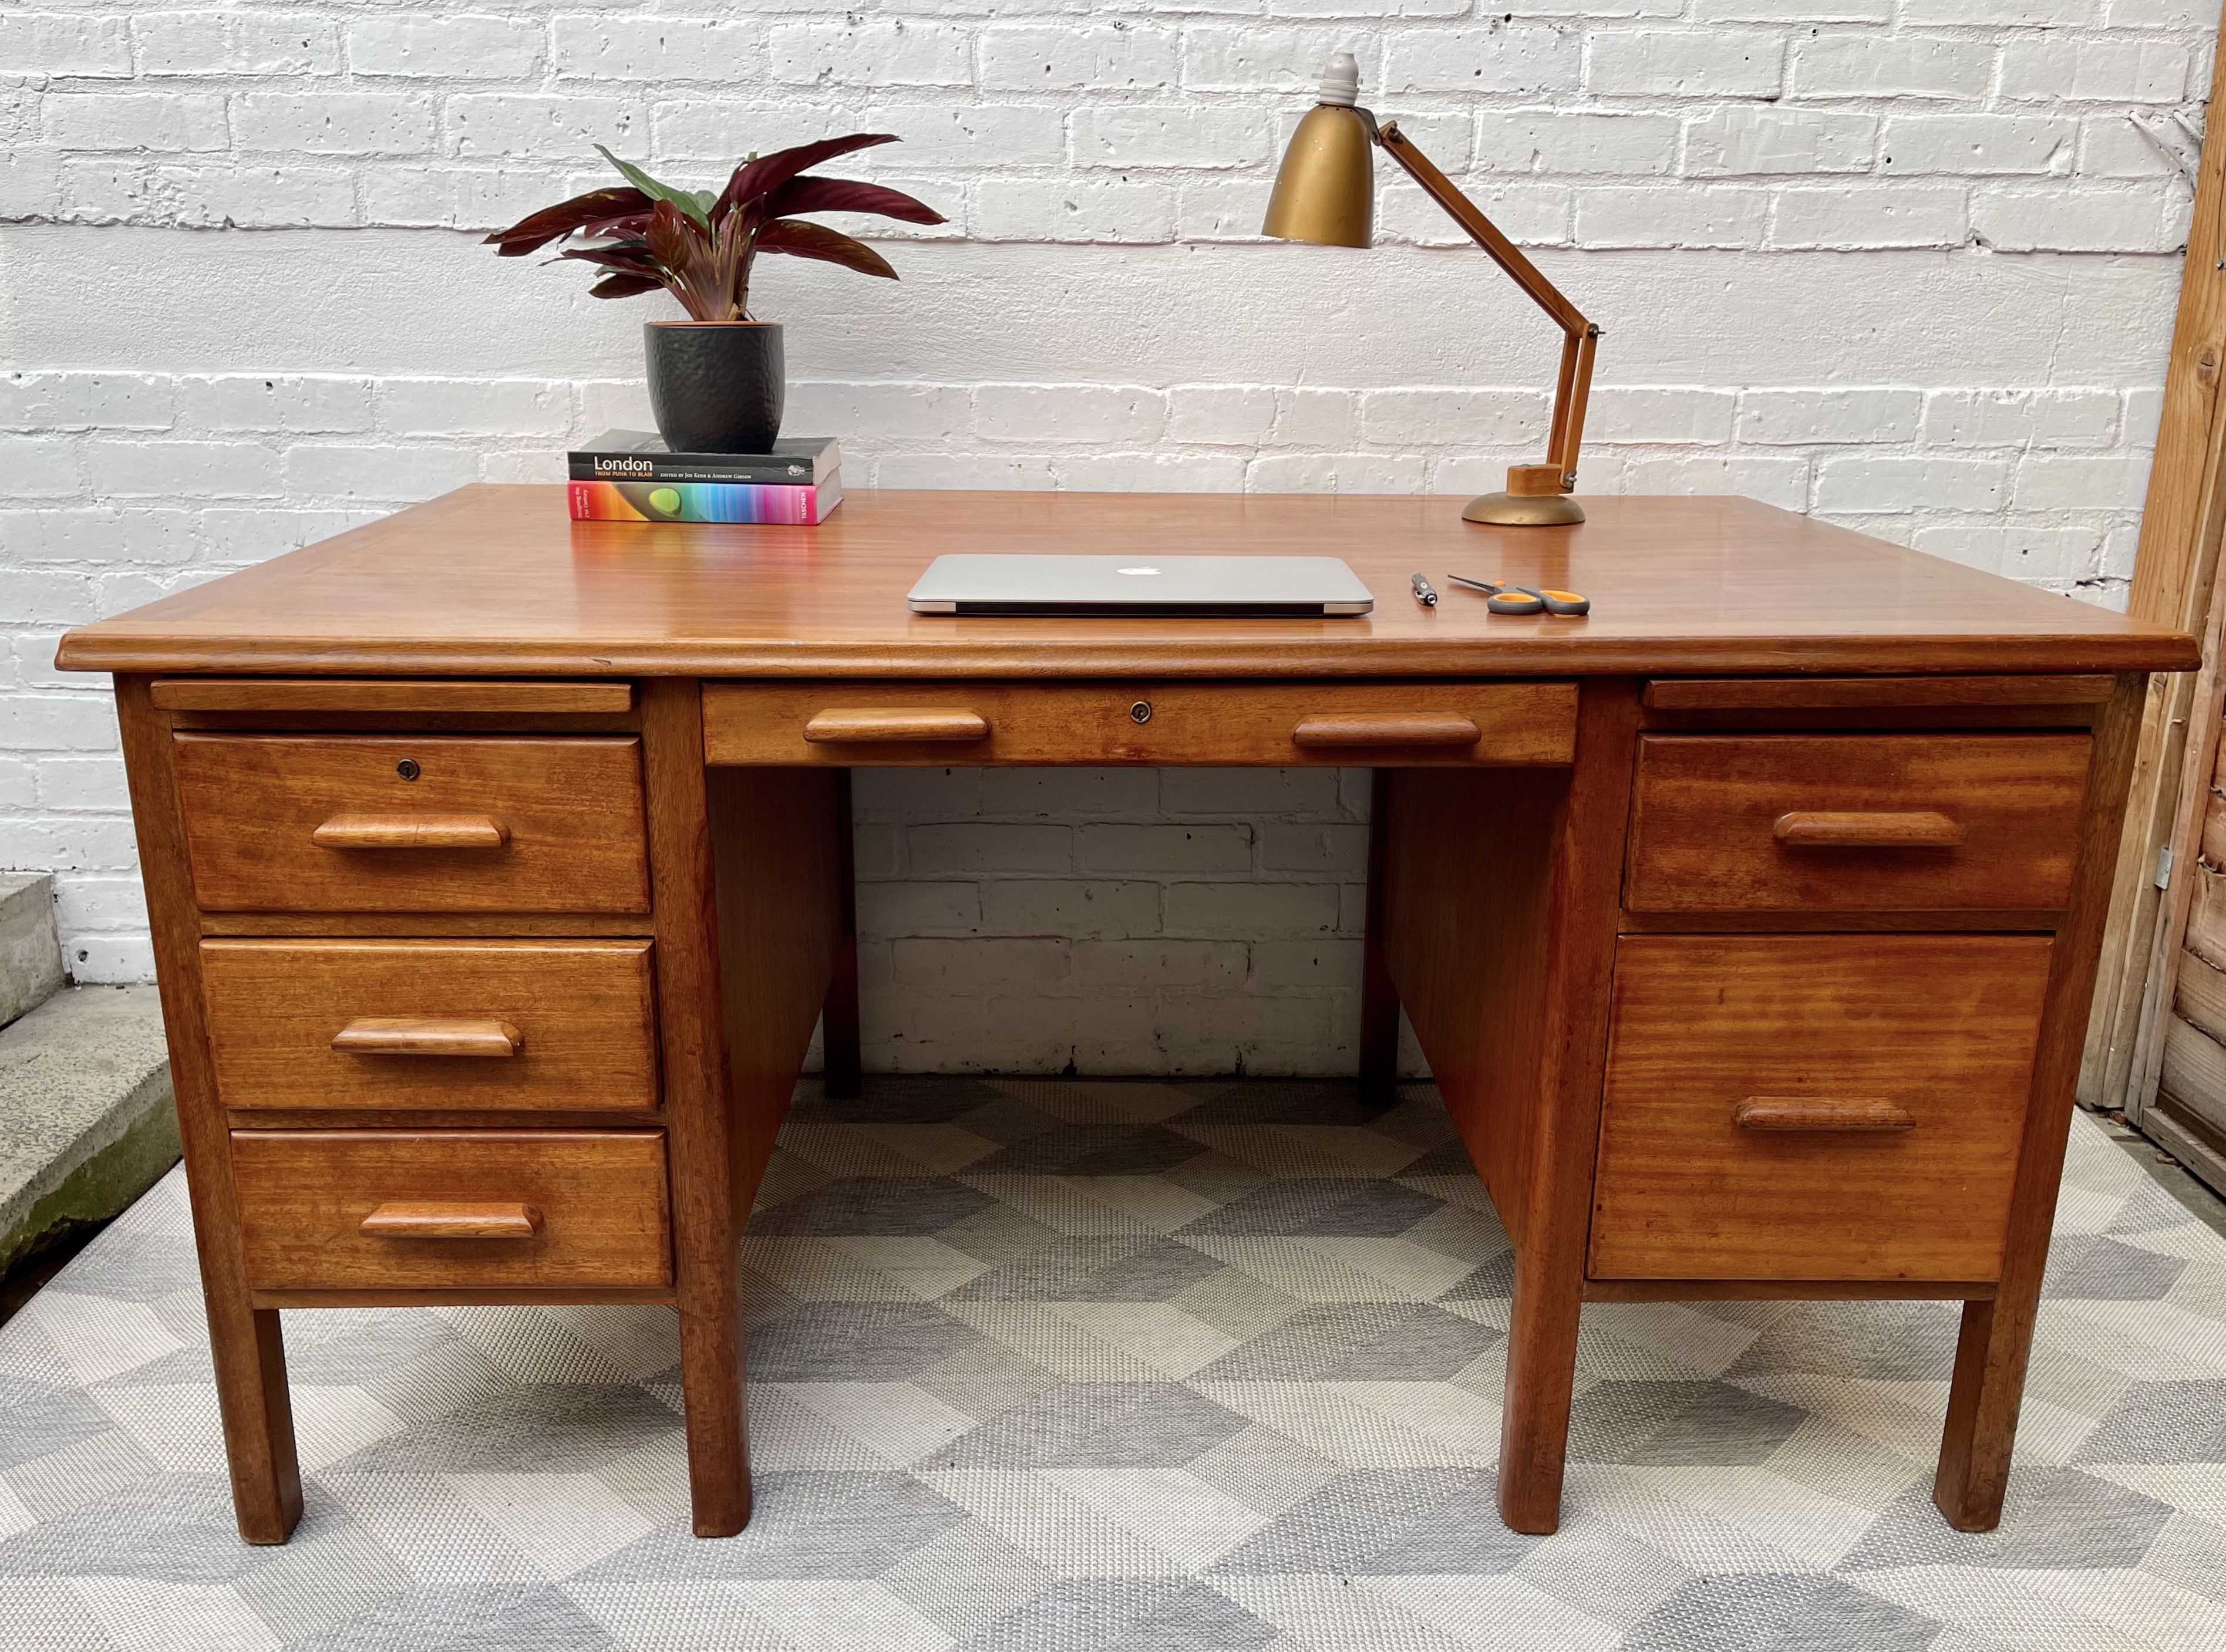 Large Vintage Wooden Desk With Drawers, Large Wooden Desk With Storage